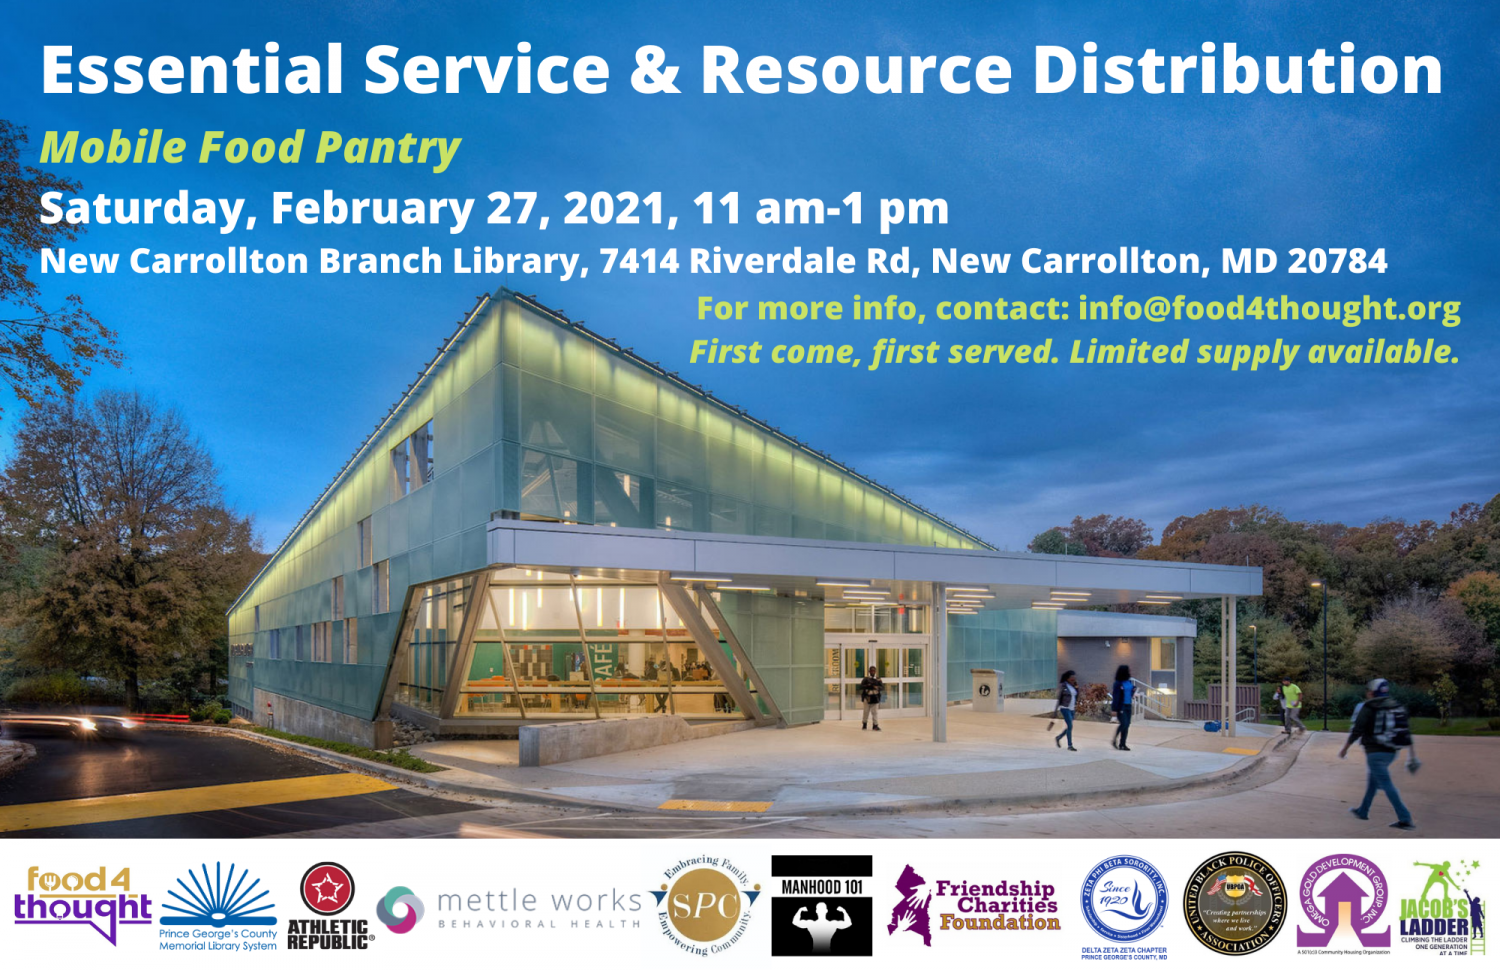 Essential Service & Resource Distribution Event